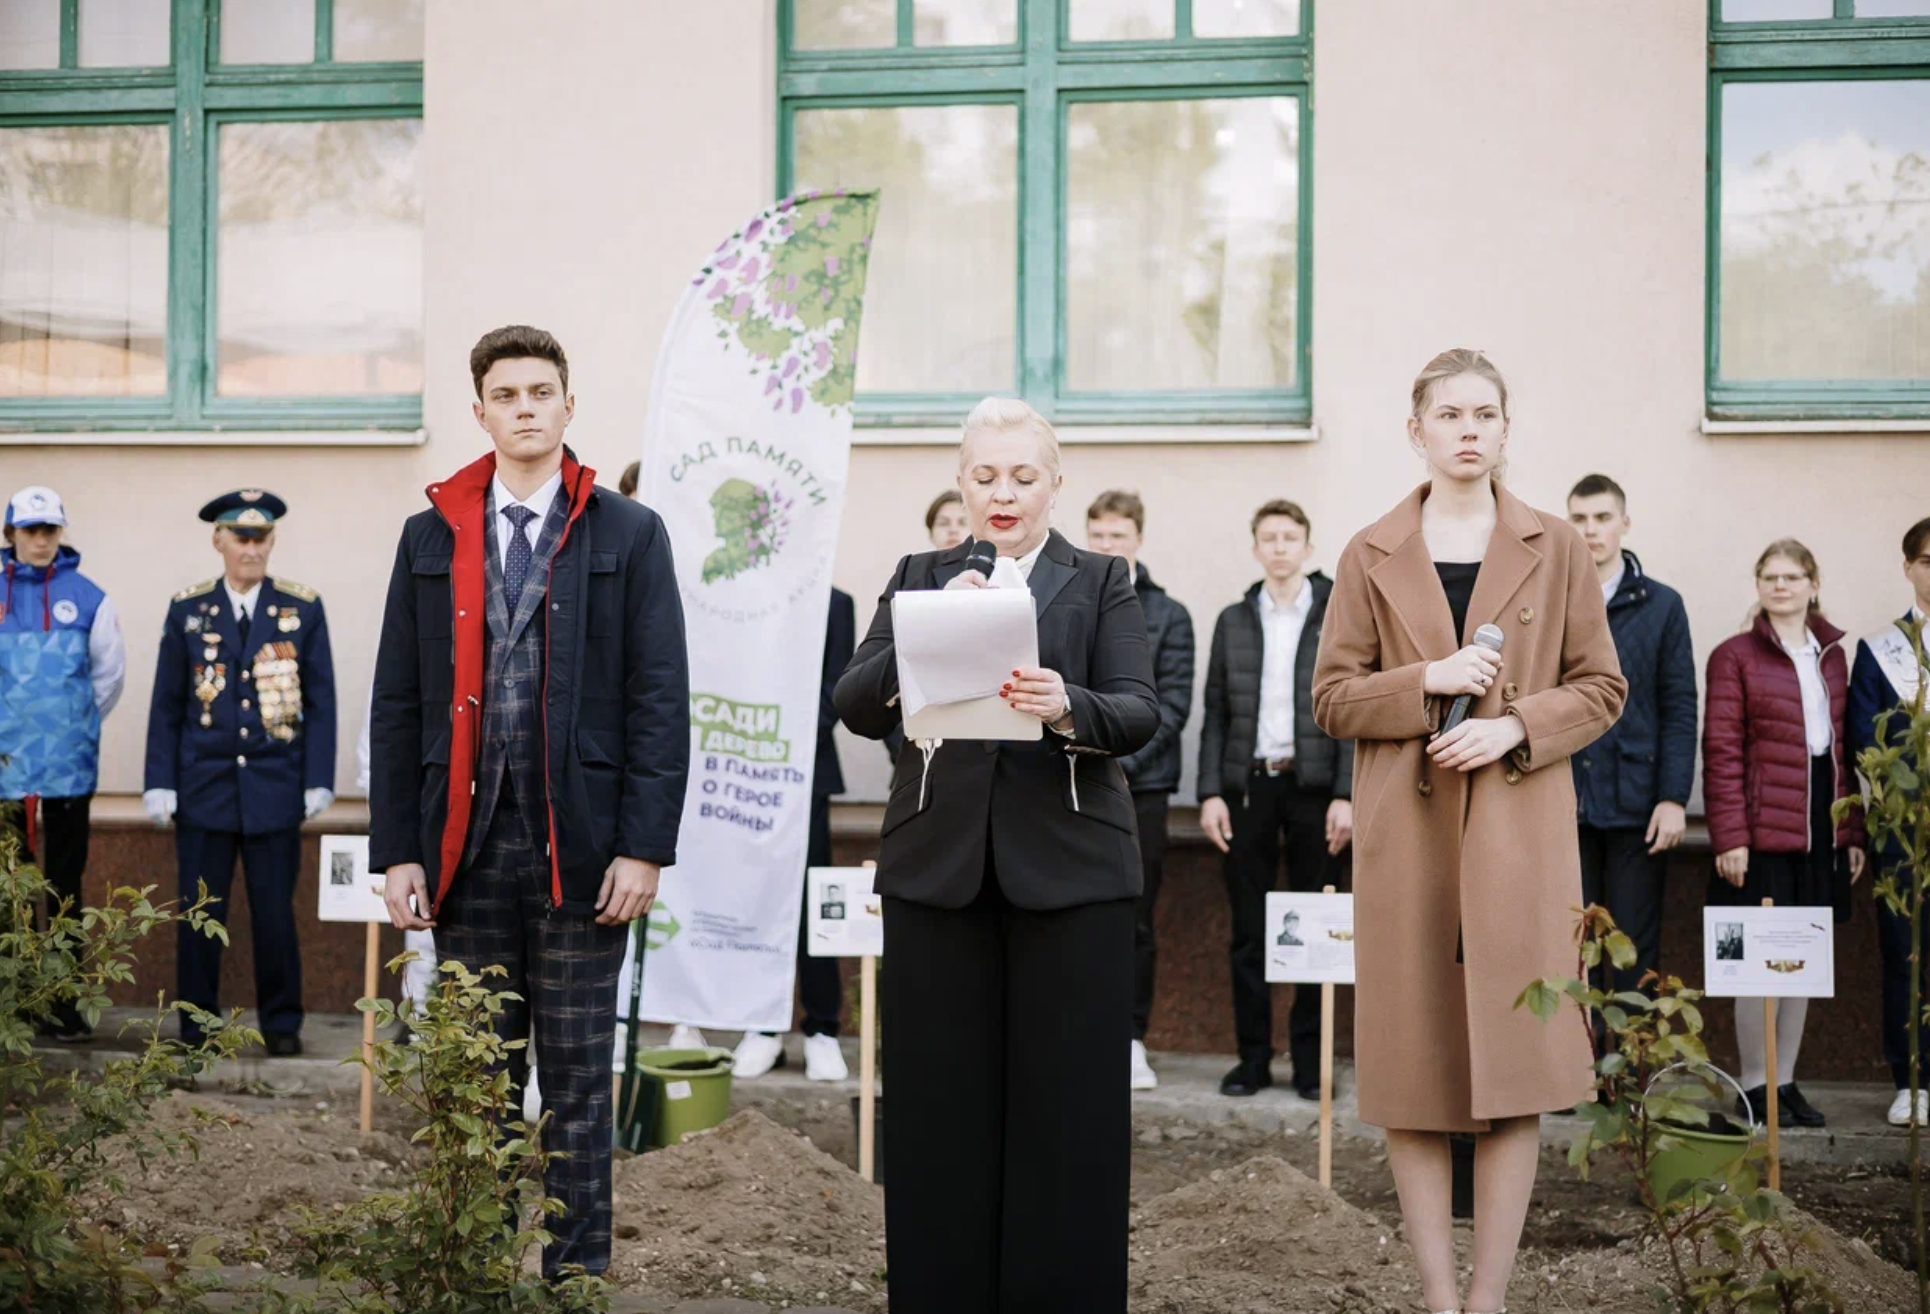 Участники акции "Сад памяти" в школе № 354 им. Д.М. Карбышева. Фото предоставлено Лайфу организаторами